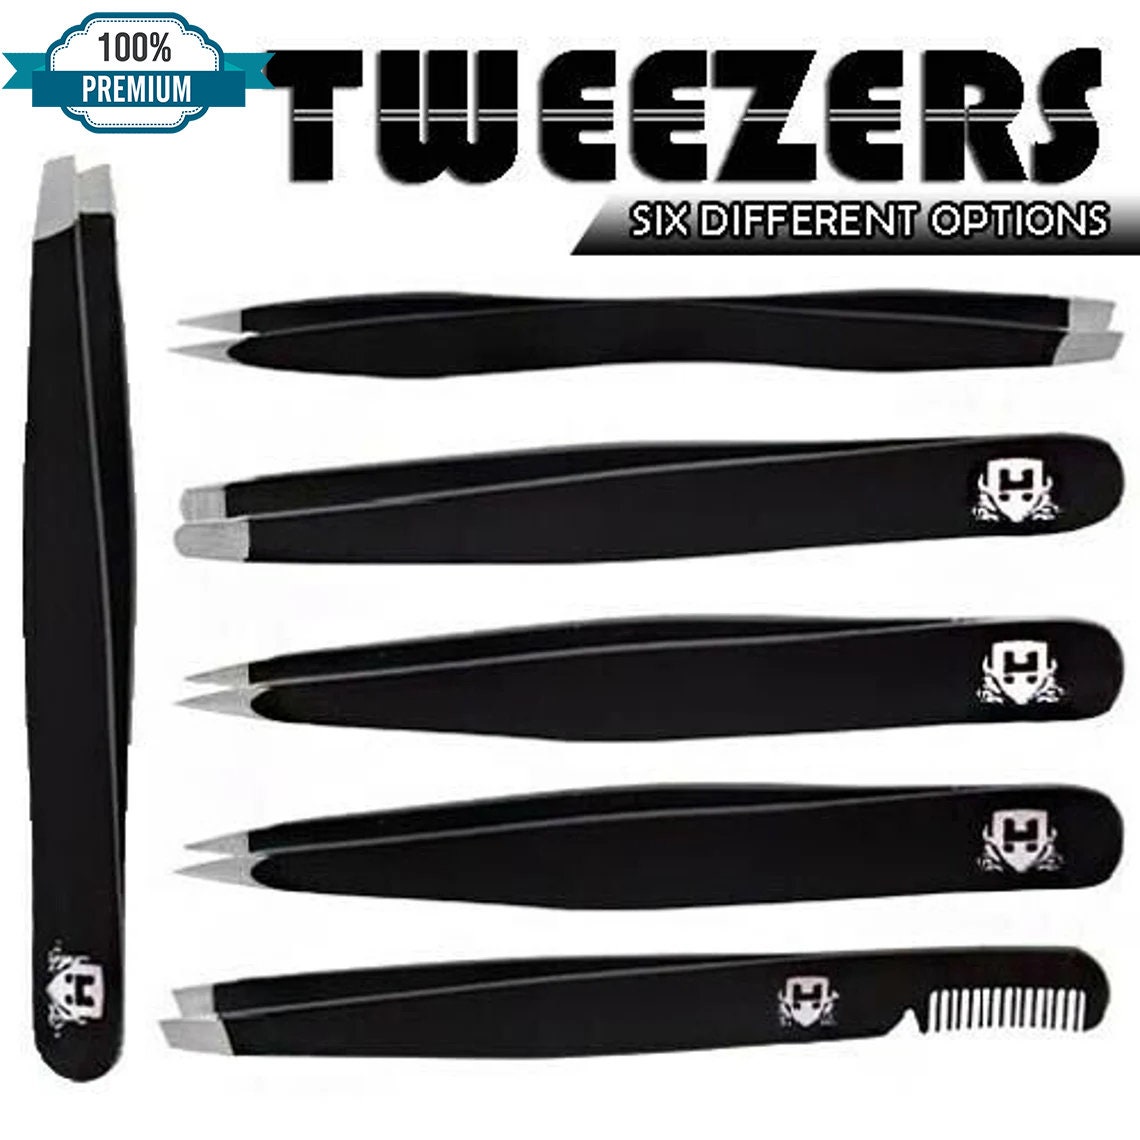 Tweezers Tweezing Tweeze Plucking Holding Manipulating Eyebrow Chin  Blackheads Trim Hair Pointed .SVG .PNG Clipart Vector Cricut Cut Cutting 